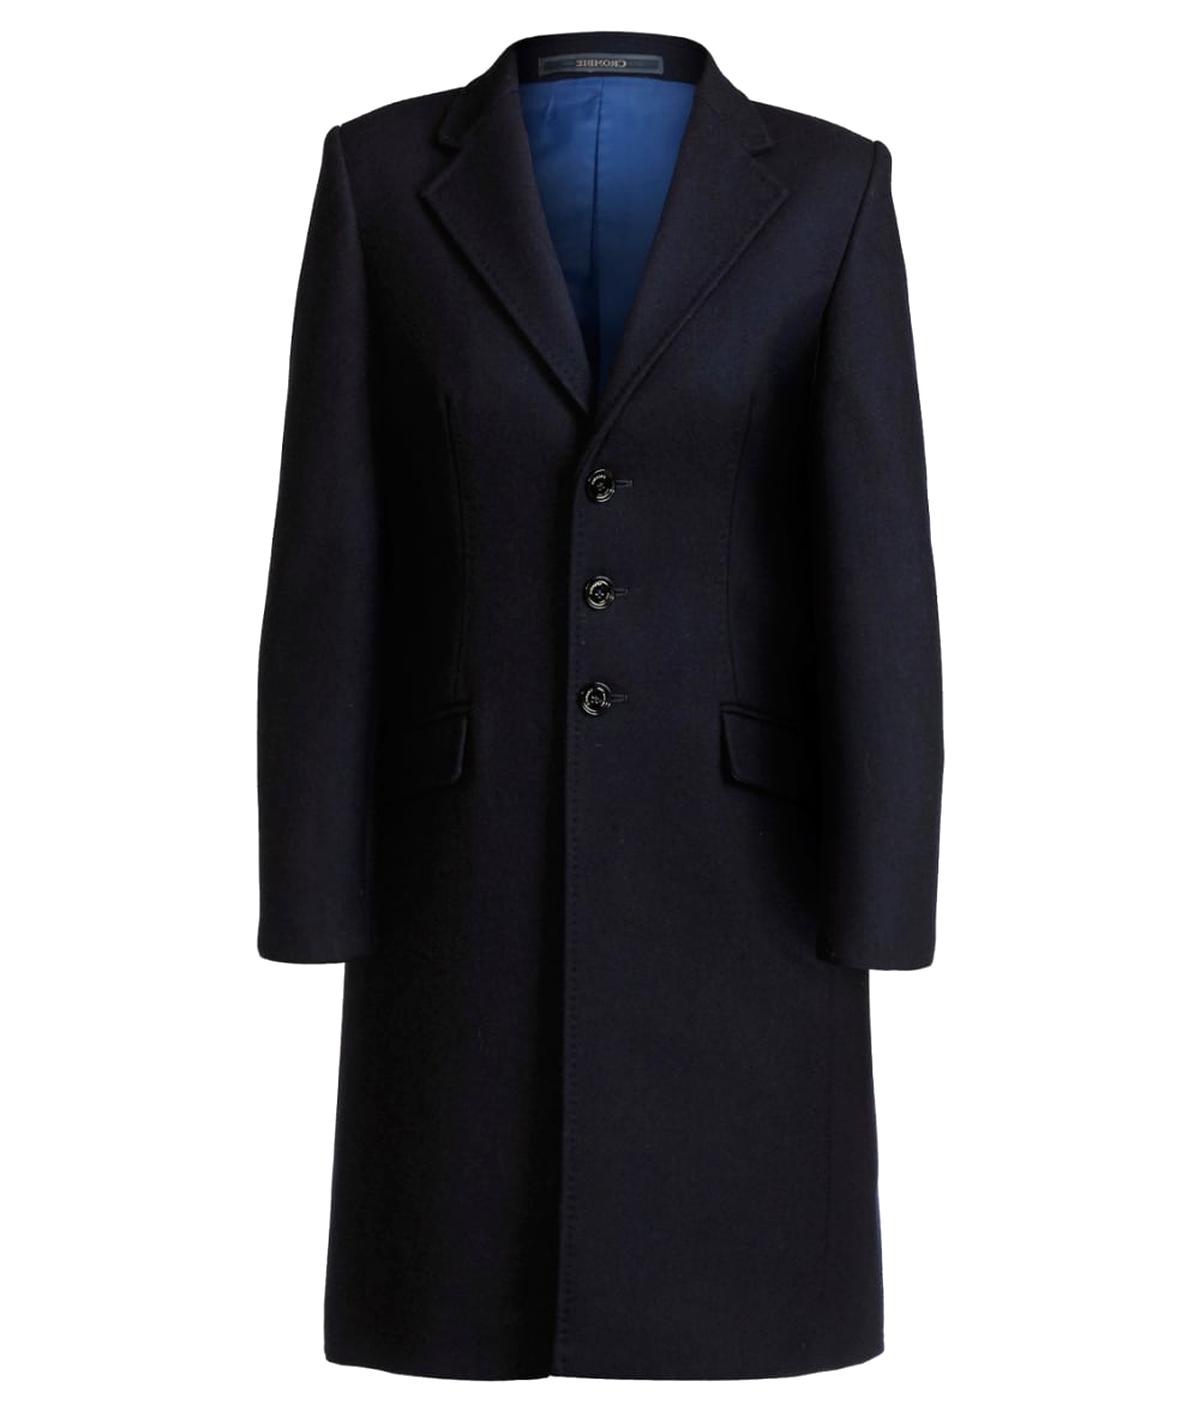 Ladies Crombie Coat for sale in UK | 25 used Ladies Crombie Coats